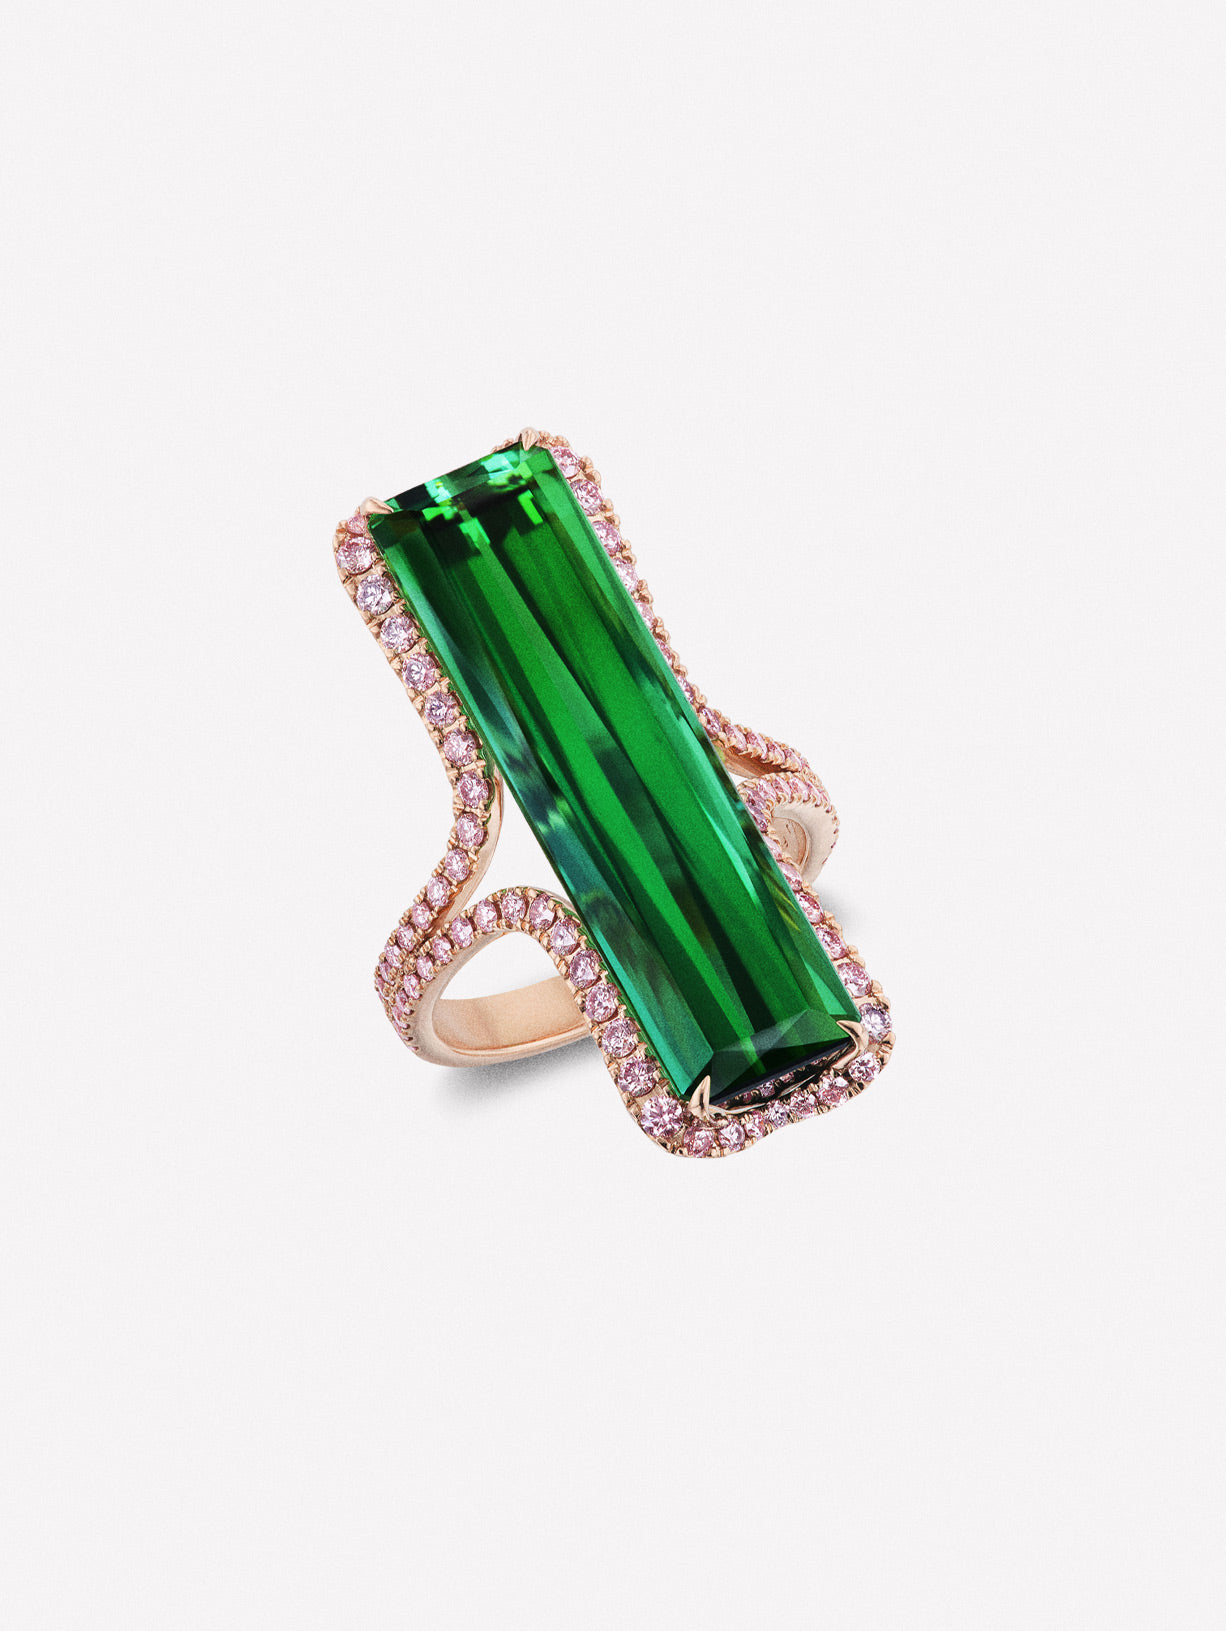 Argyle Pink™ Diamond and Green Tourmaline Ring - Pink Diamonds, J FINE - J Fine, ring - Pink Diamond Jewelry, argyle-pink™-diamond-and-green-tourmaline-ring-by-j-fine-1 - Argyle Pink Diam